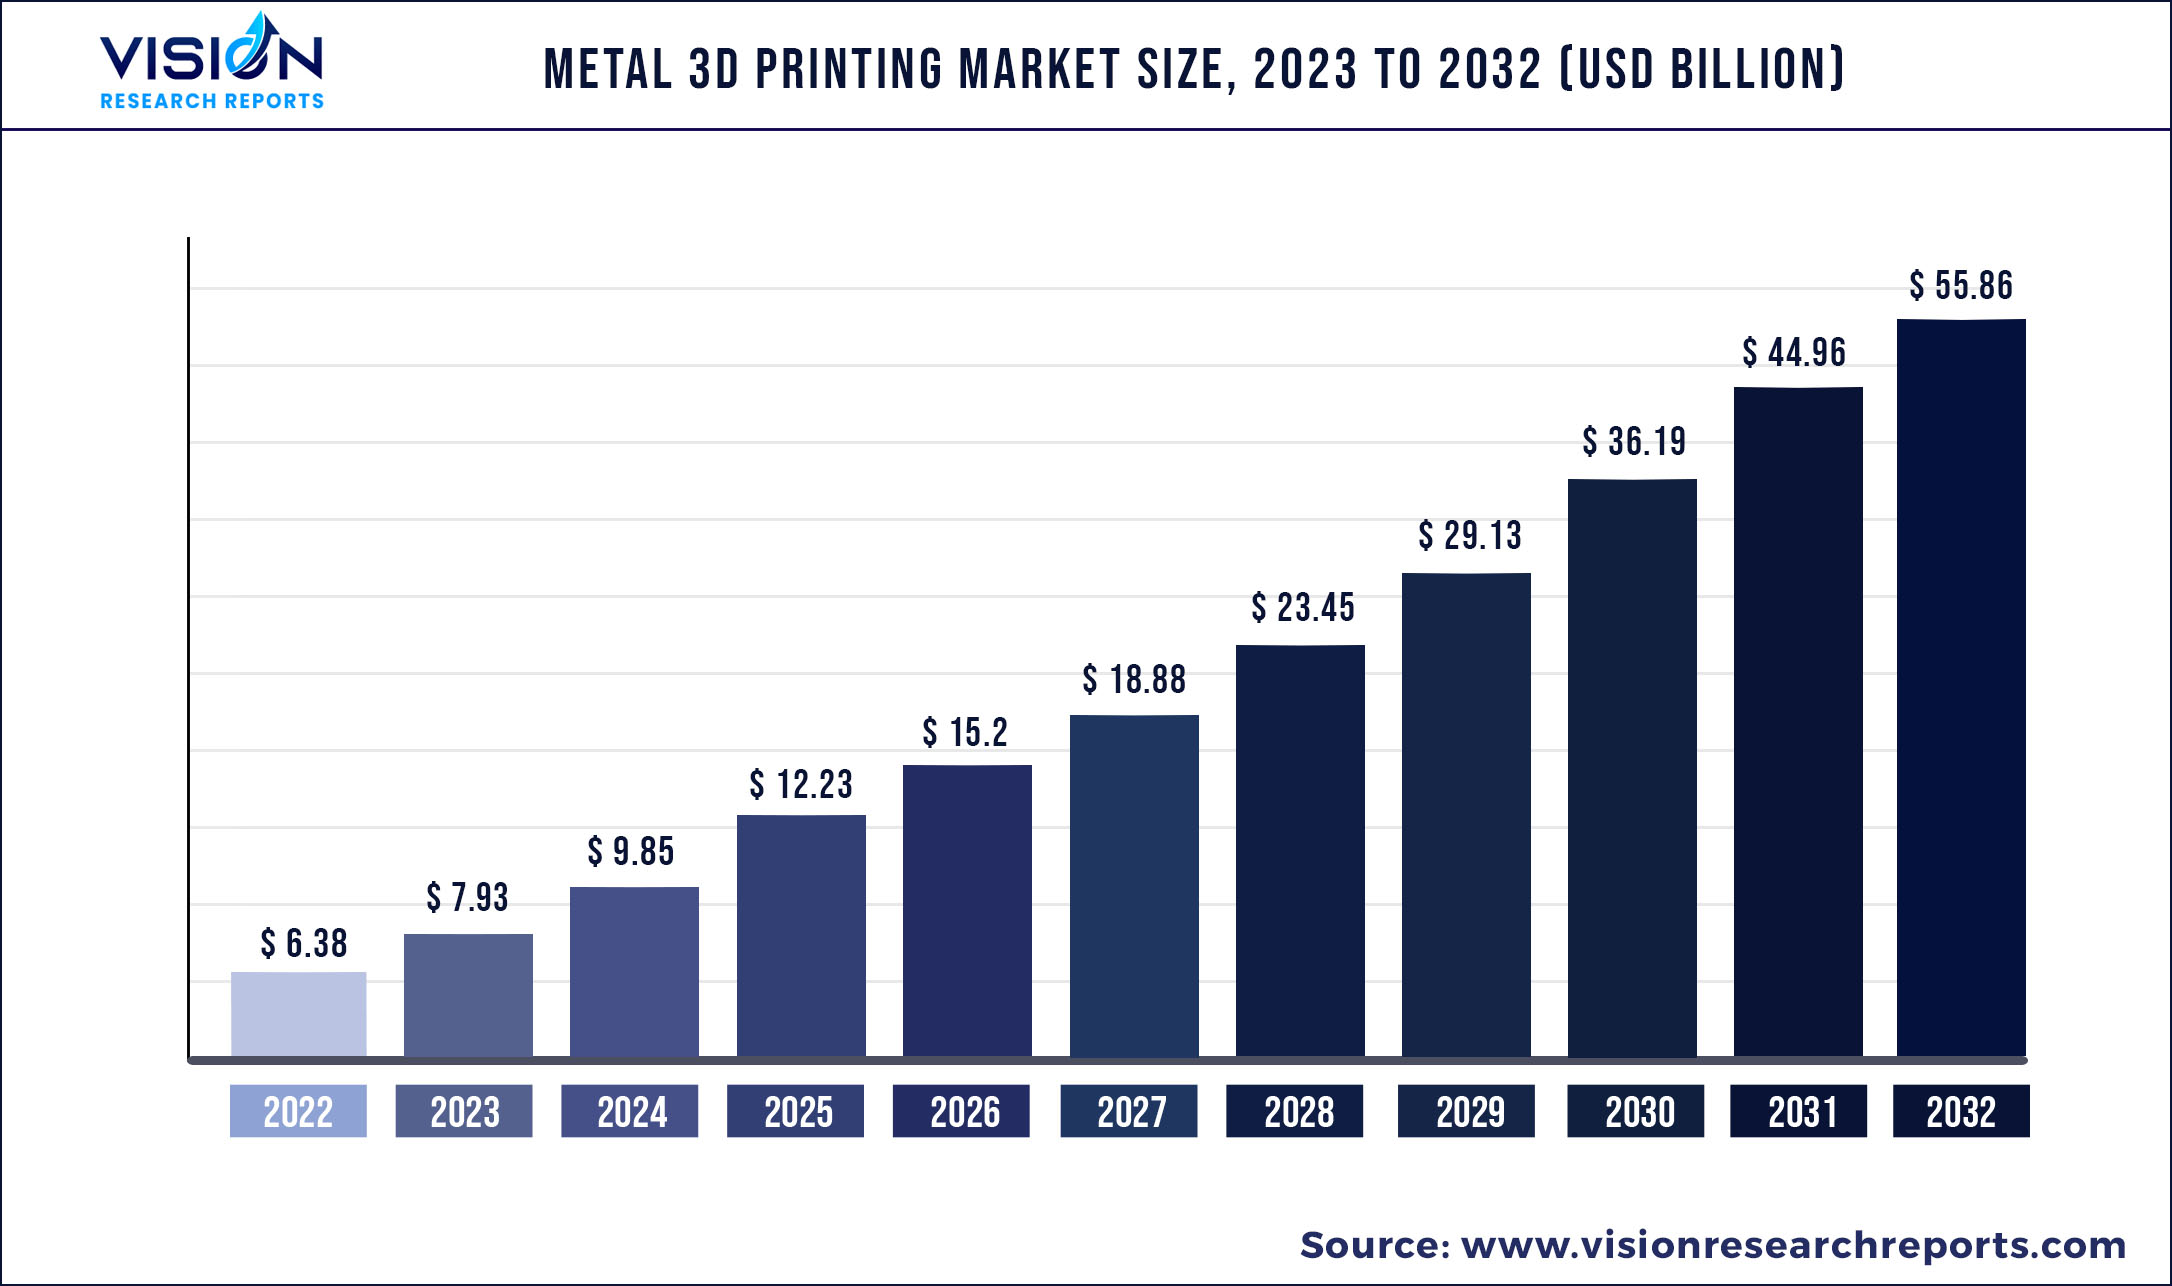 Metal 3D Printing Market Size 2023 to 2032